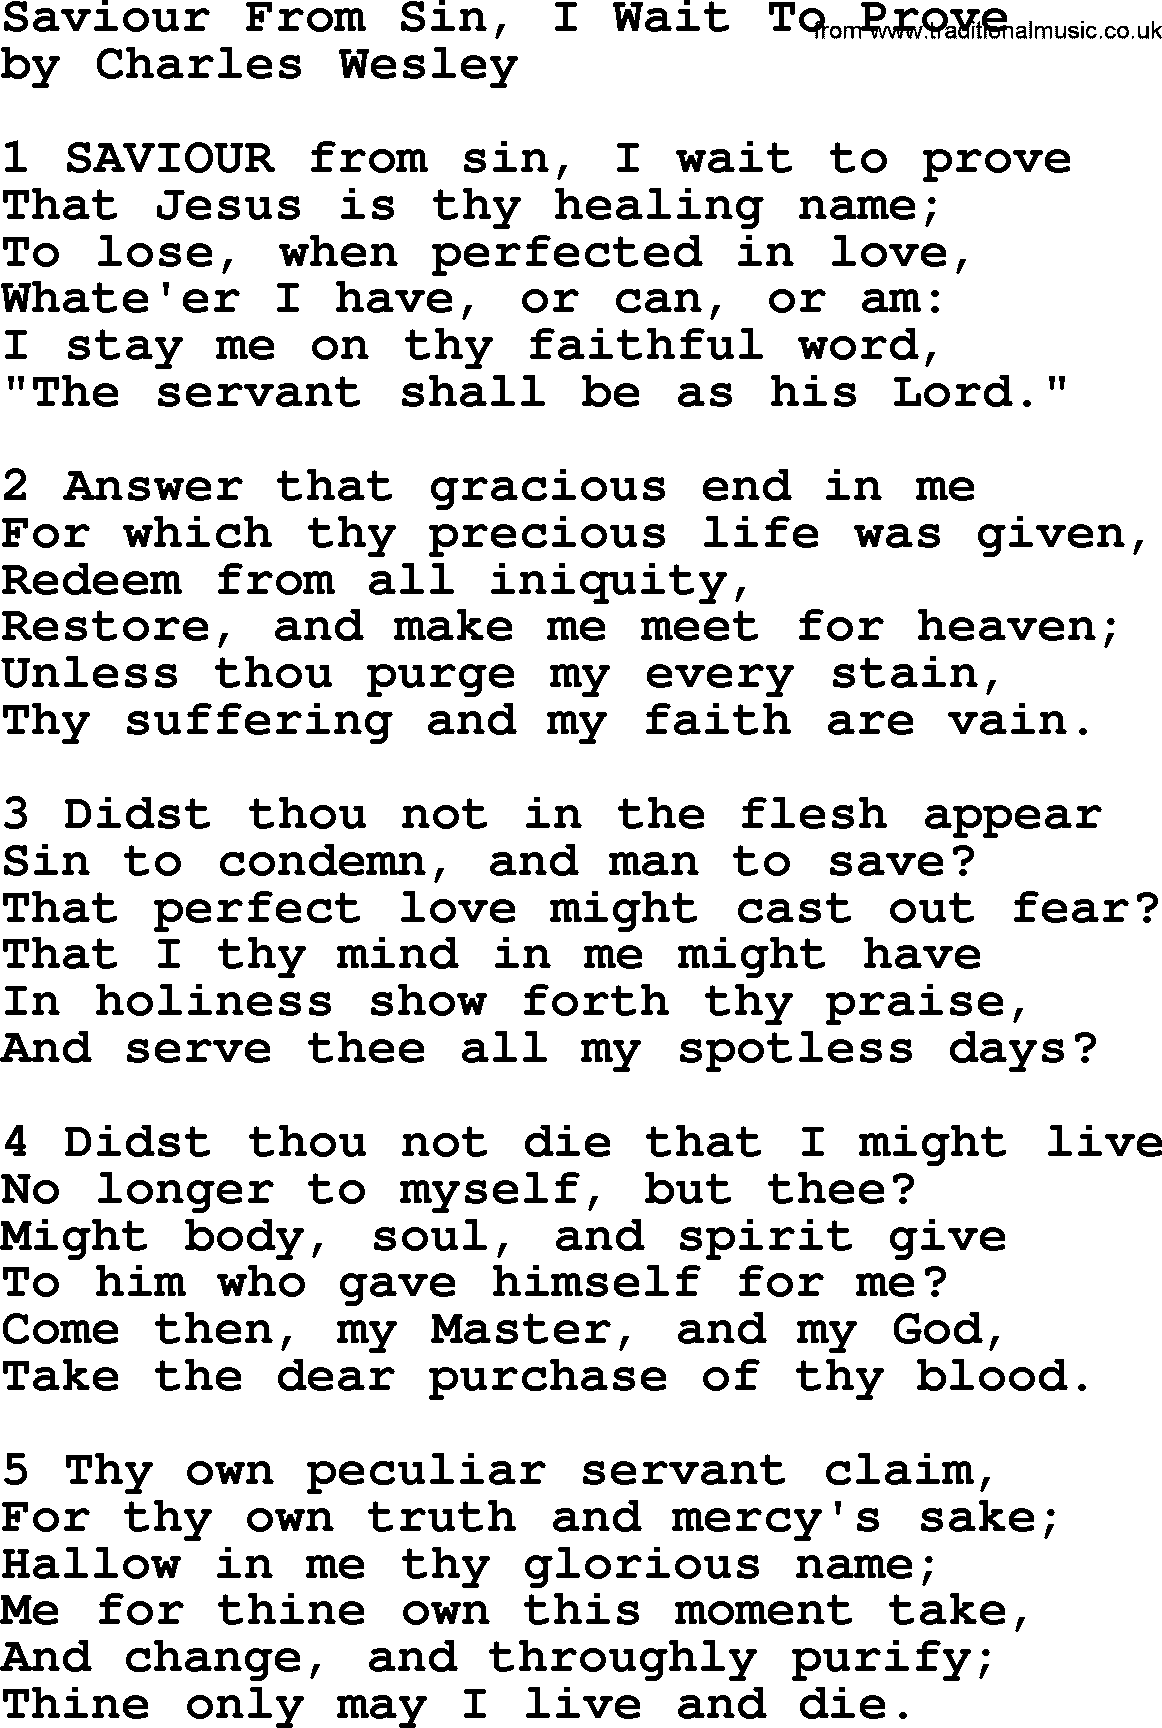 Charles Wesley hymn: Saviour From Sin, I Wait To Prove, lyrics